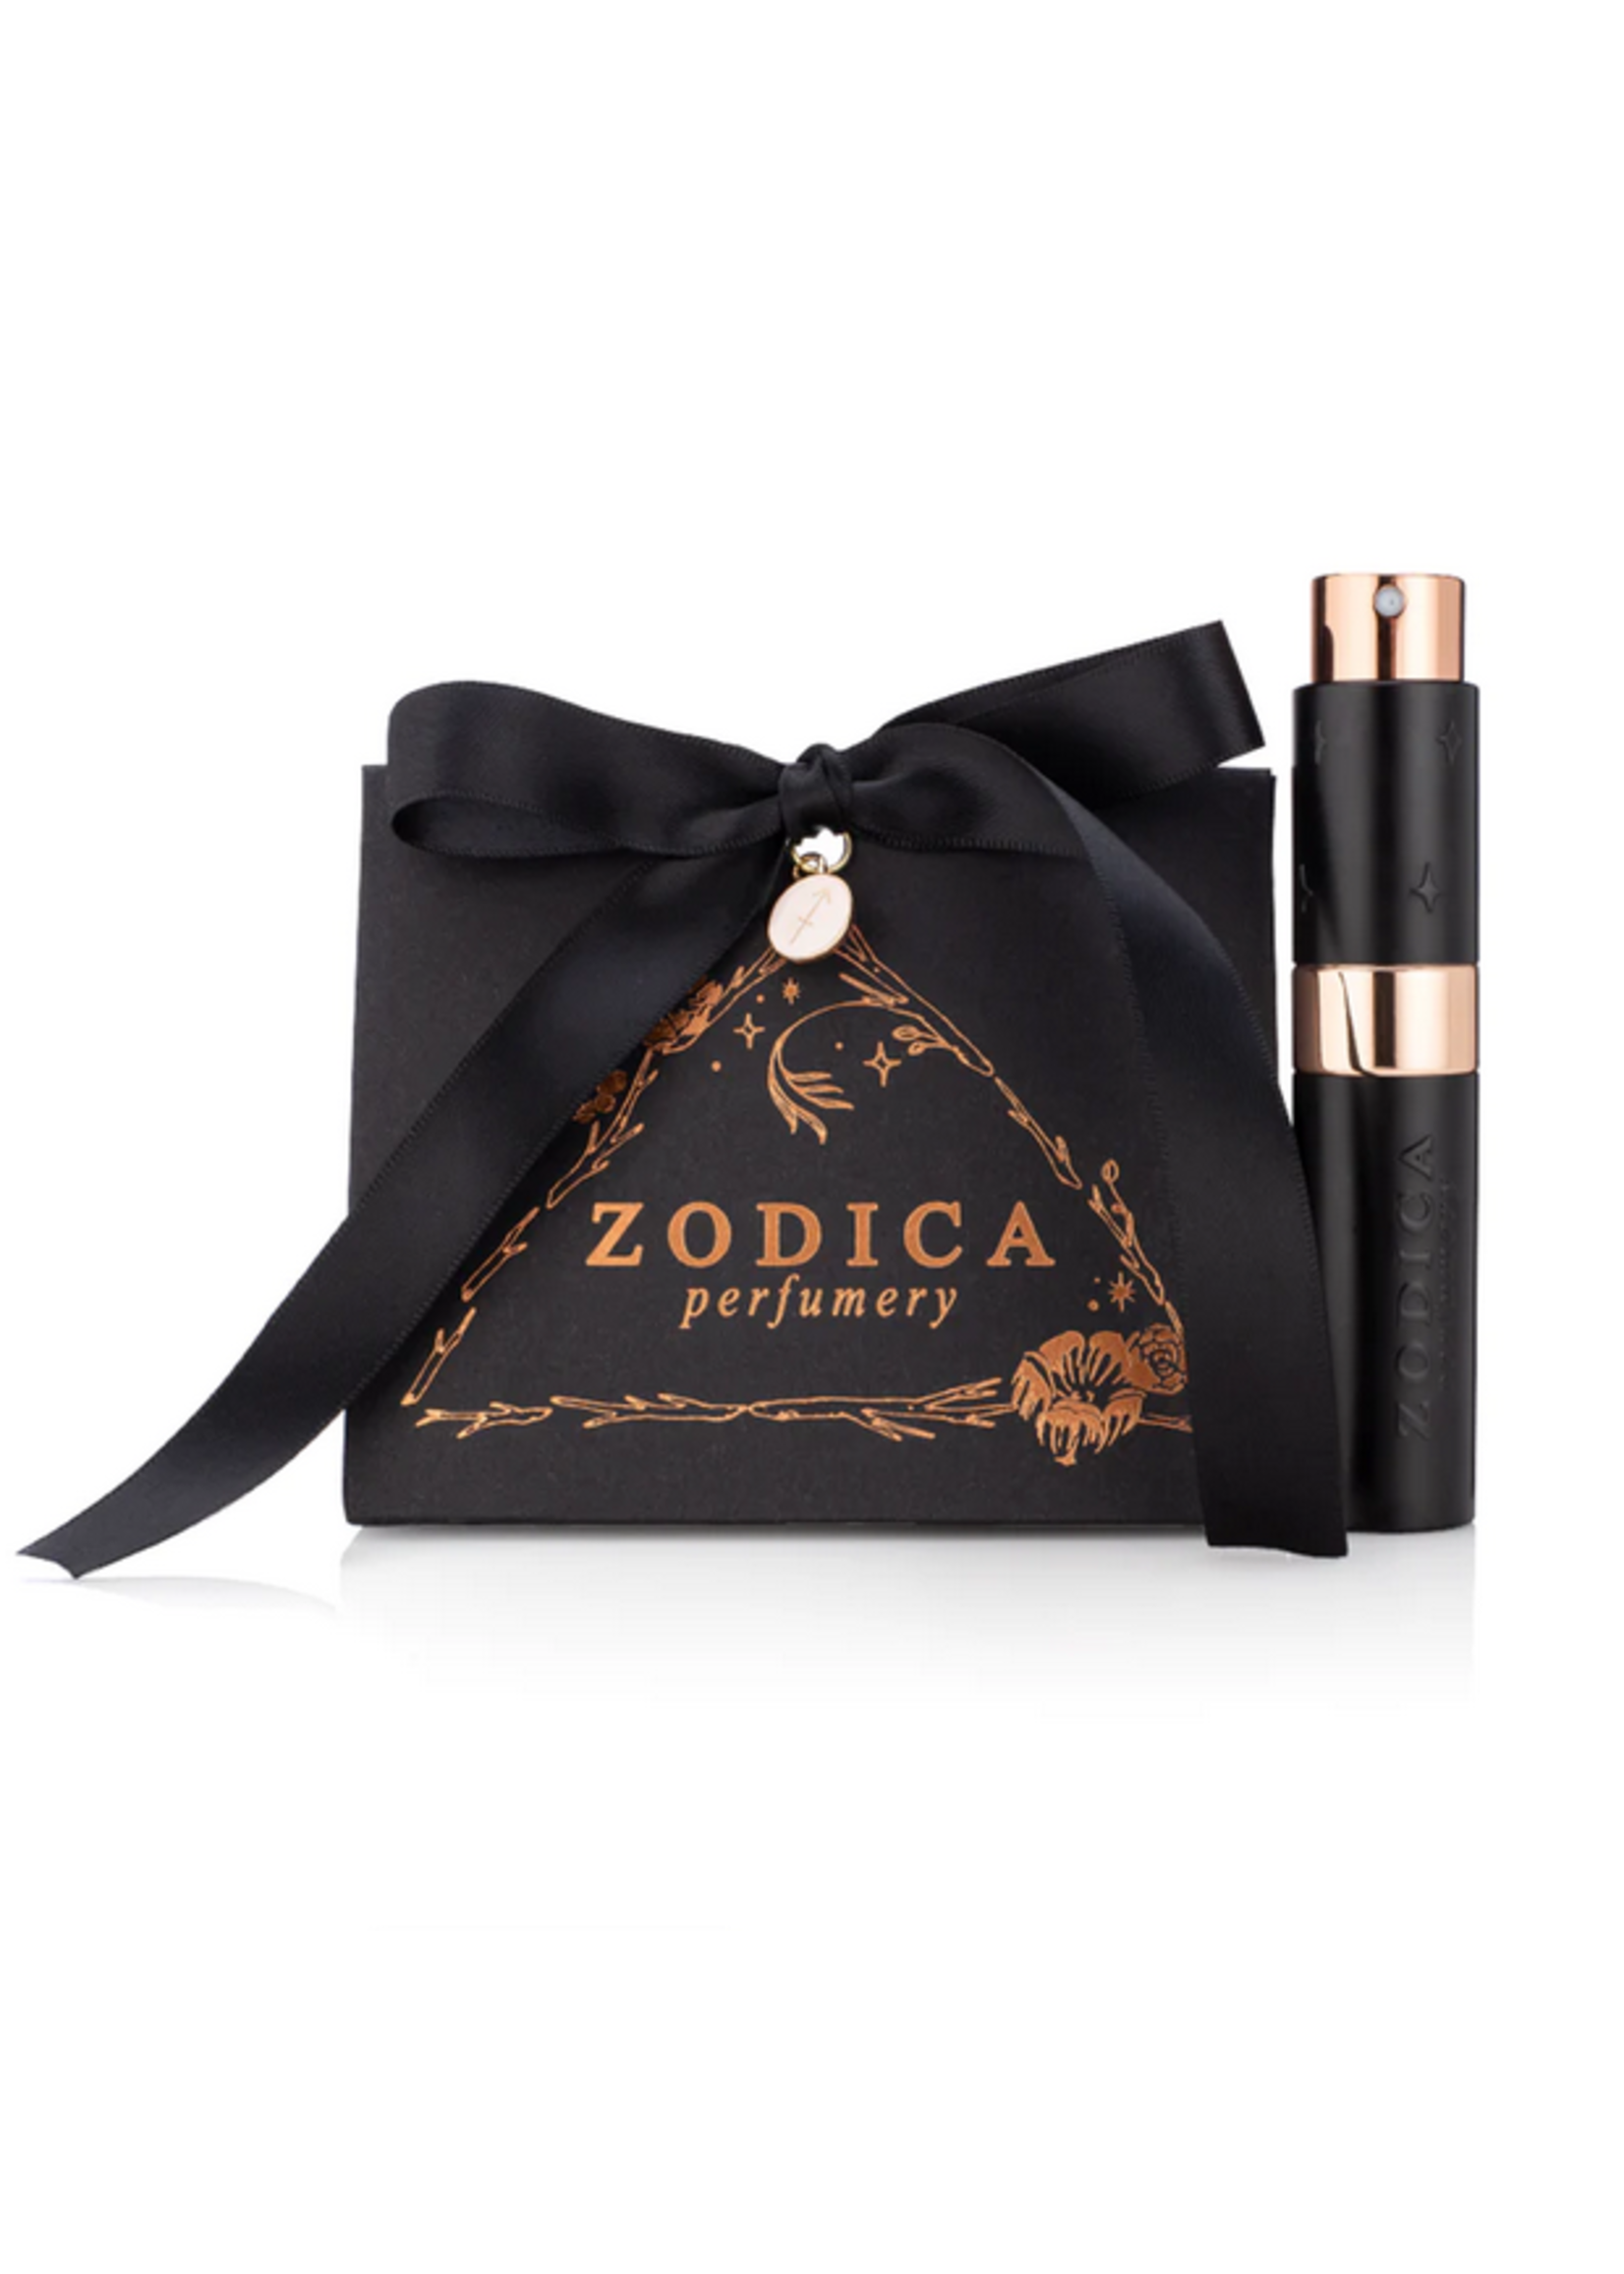 Zodica Perfume Twist & Spritz Travel Spray Gift